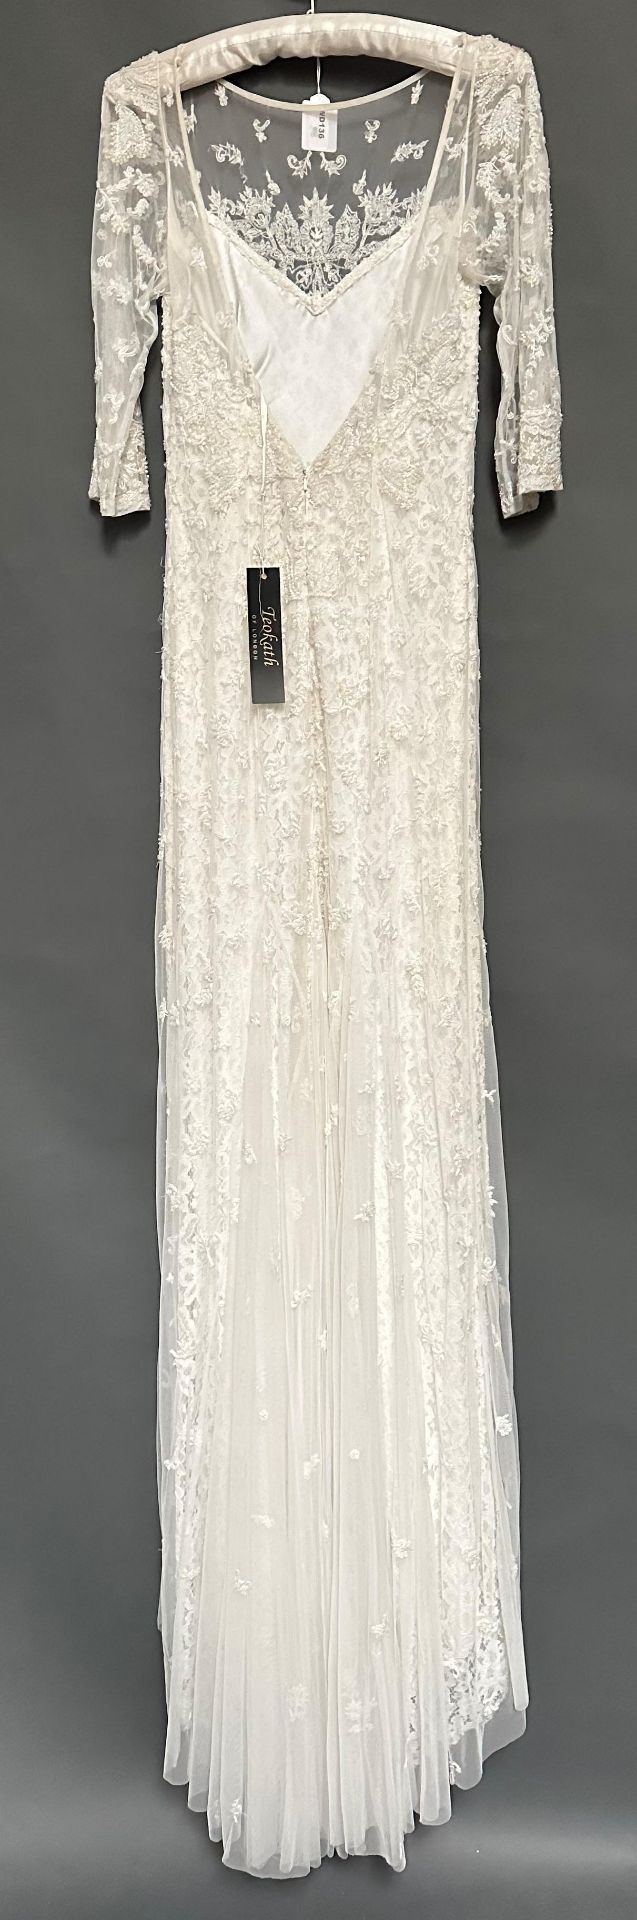 1 x ELIZA JANE HOWELL 'Violetta' Chiffon & Beaded Designer Wedding Dress Bridal Gown RRP £2,535 UK10 - Image 2 of 6